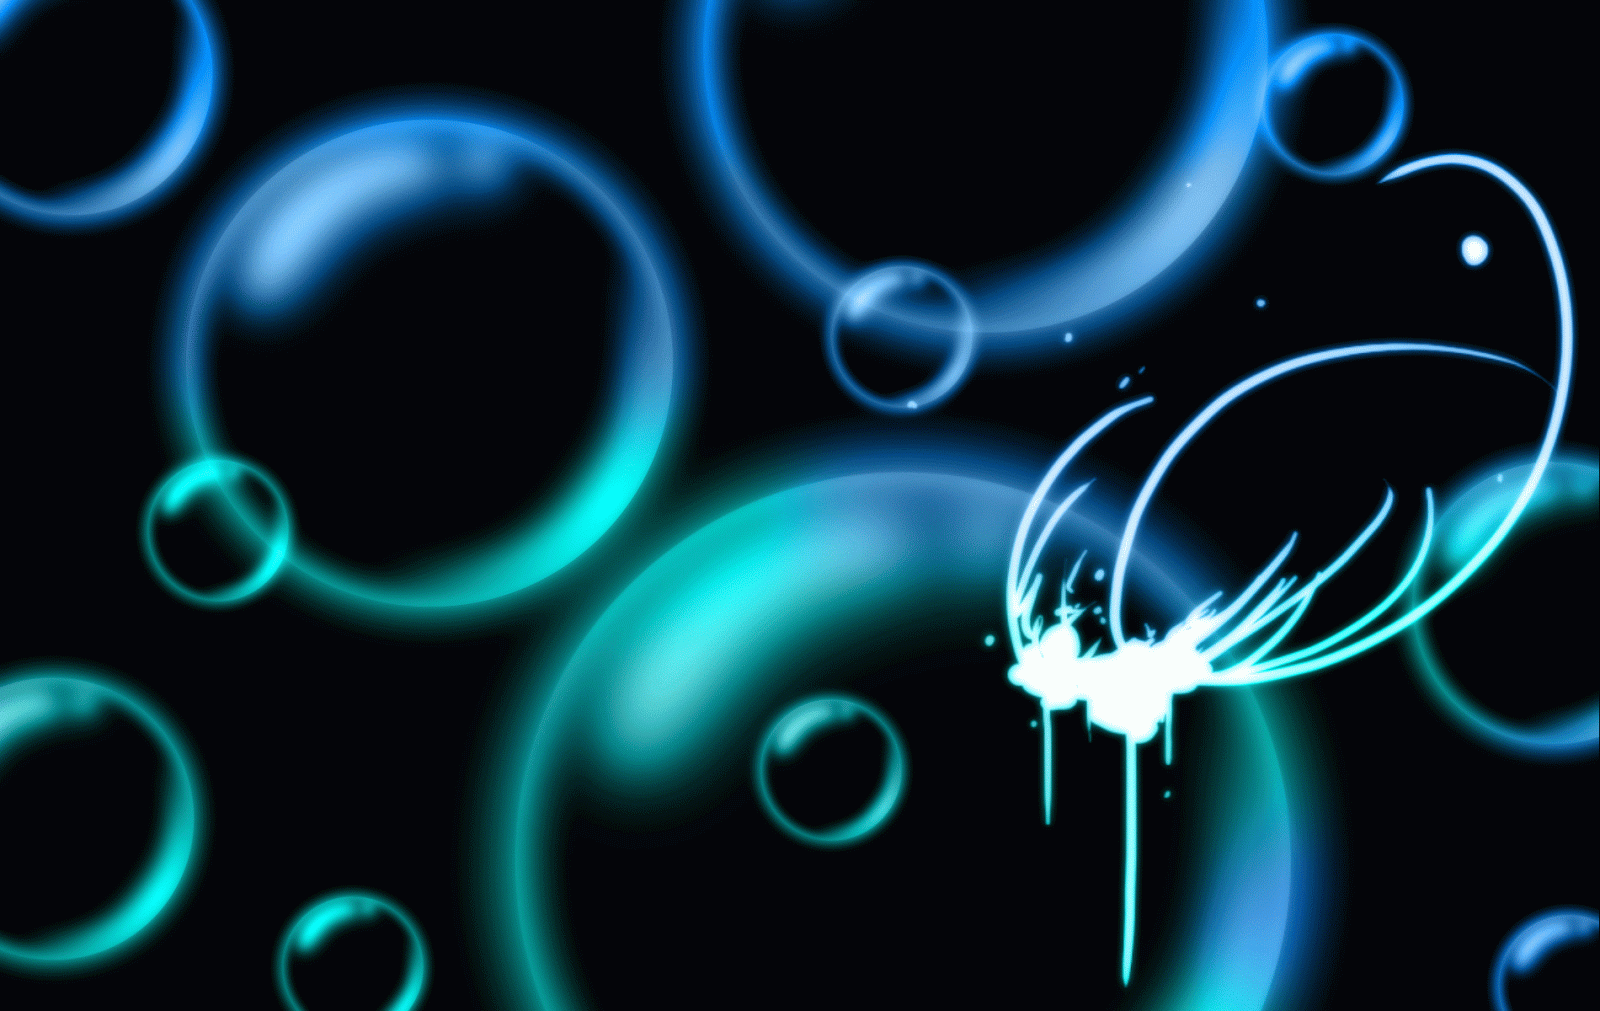 Animated Bubbles httpicefire fantasyblogspotcom201303animated